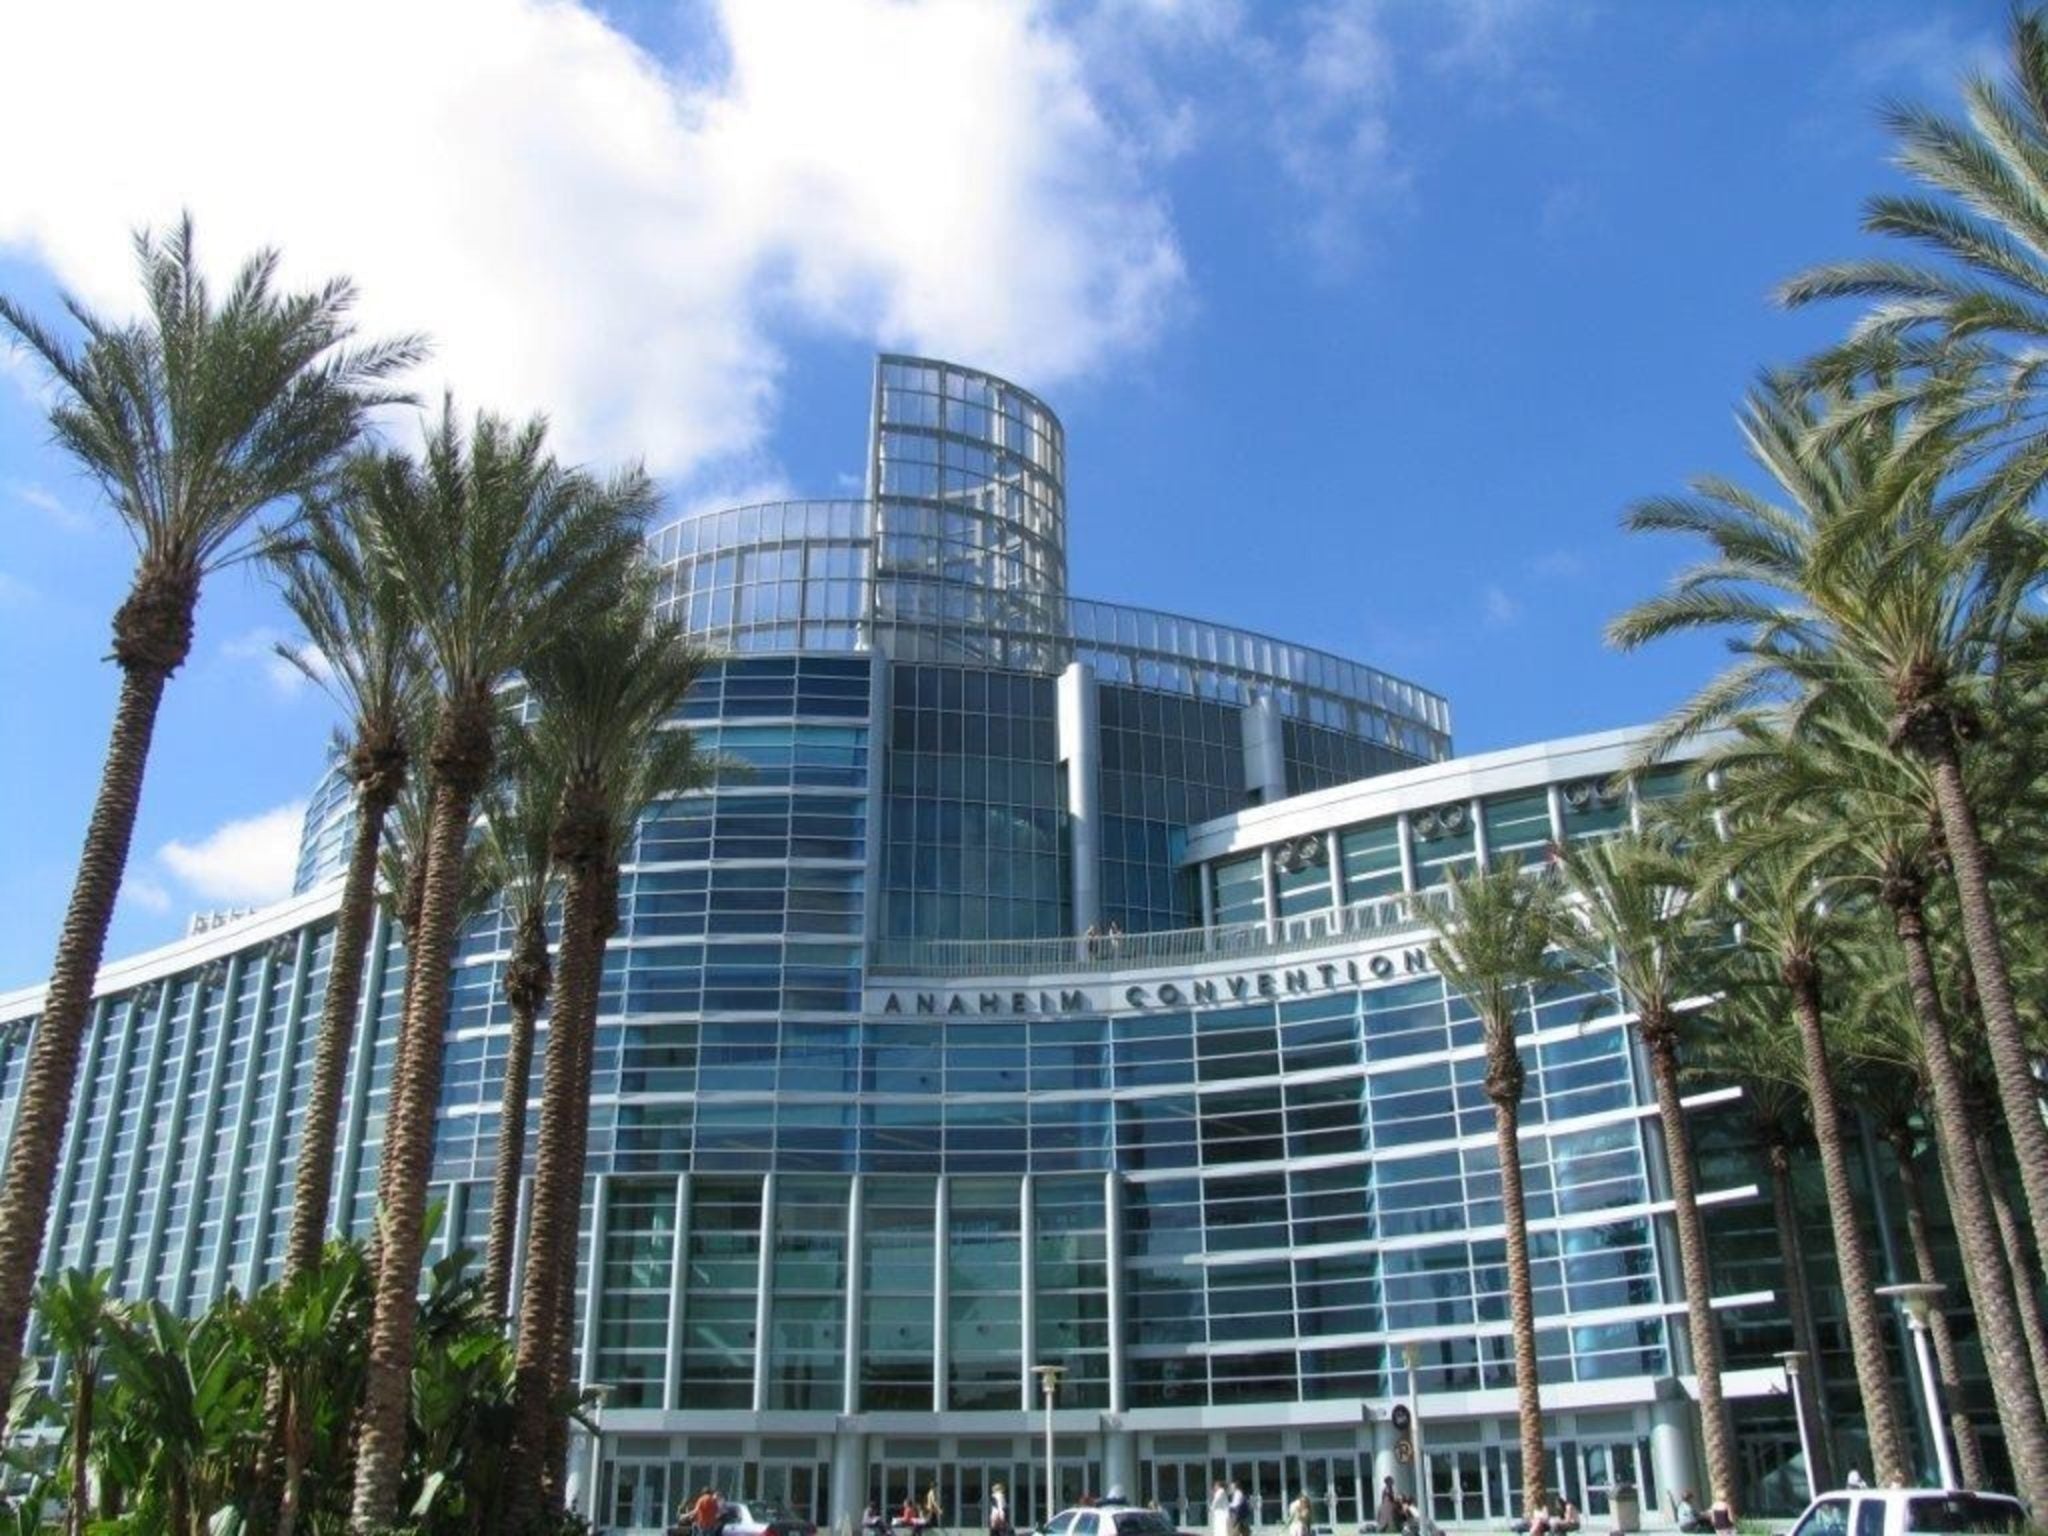 Anaheim Convention Center: A showcase of sustainability